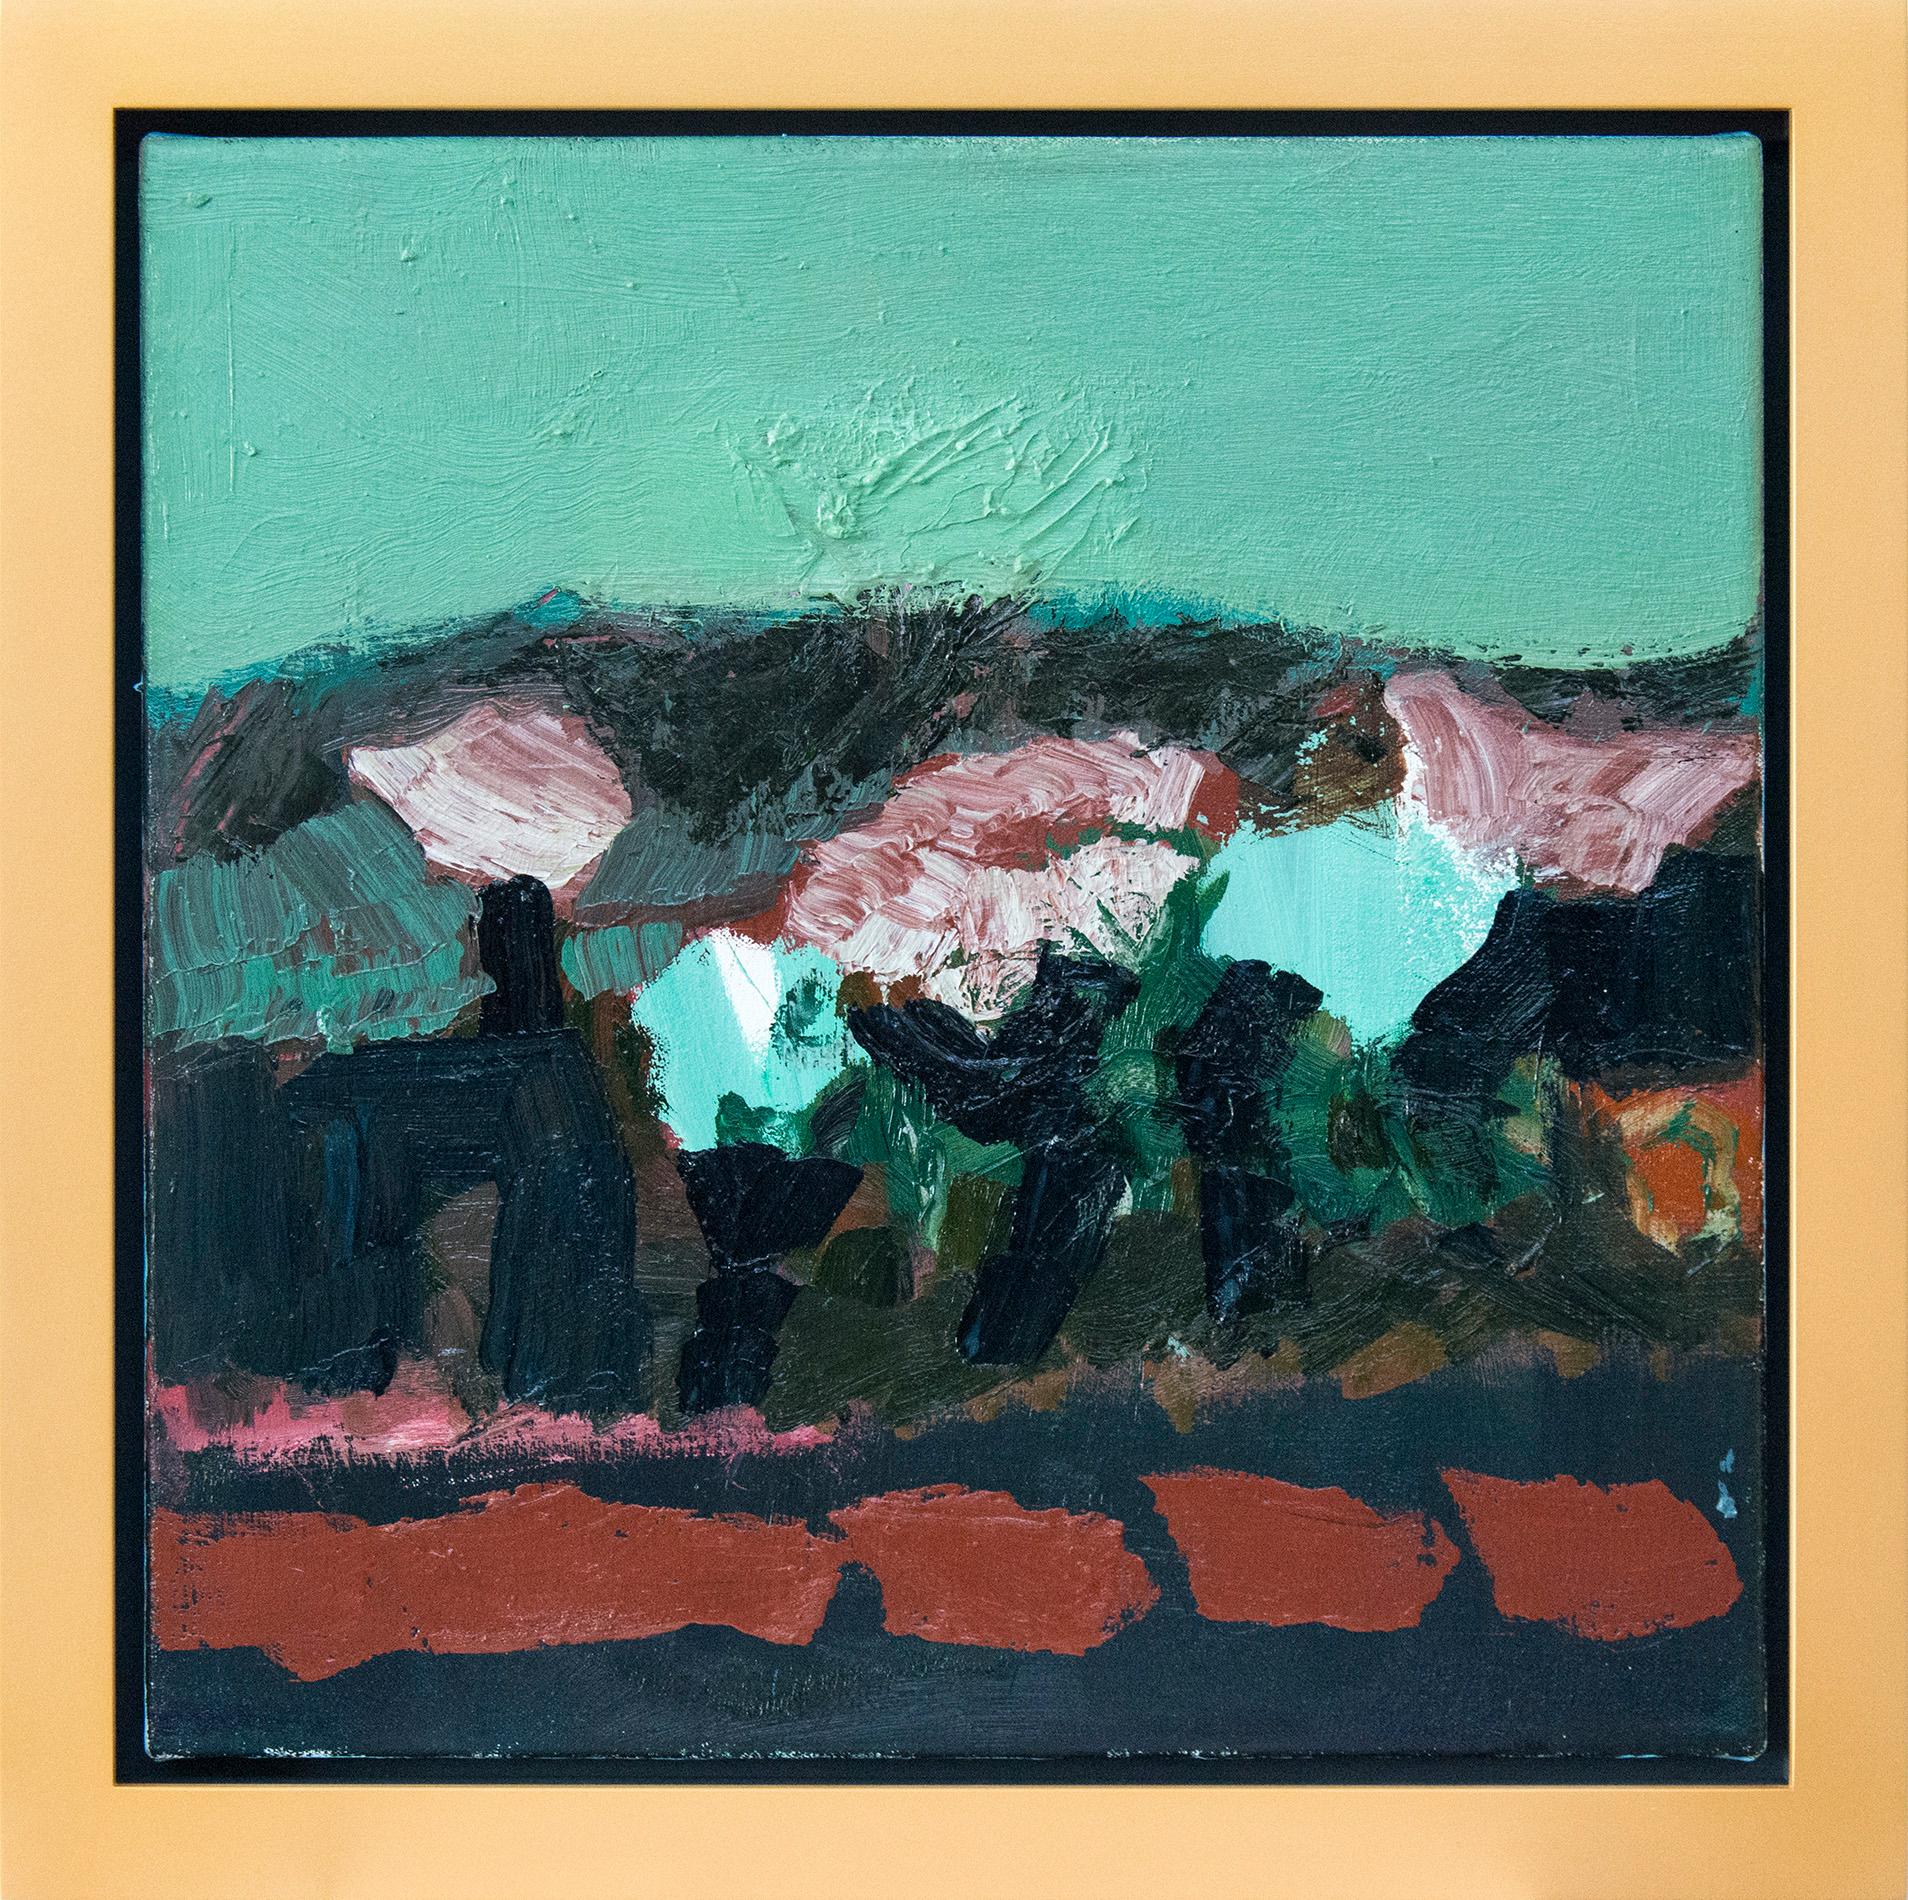 Landscape Painting Jennifer Hornyak - Going by Trees in Spring - petit paysage abstrait vert sarcelle, bleu, rouge, huile